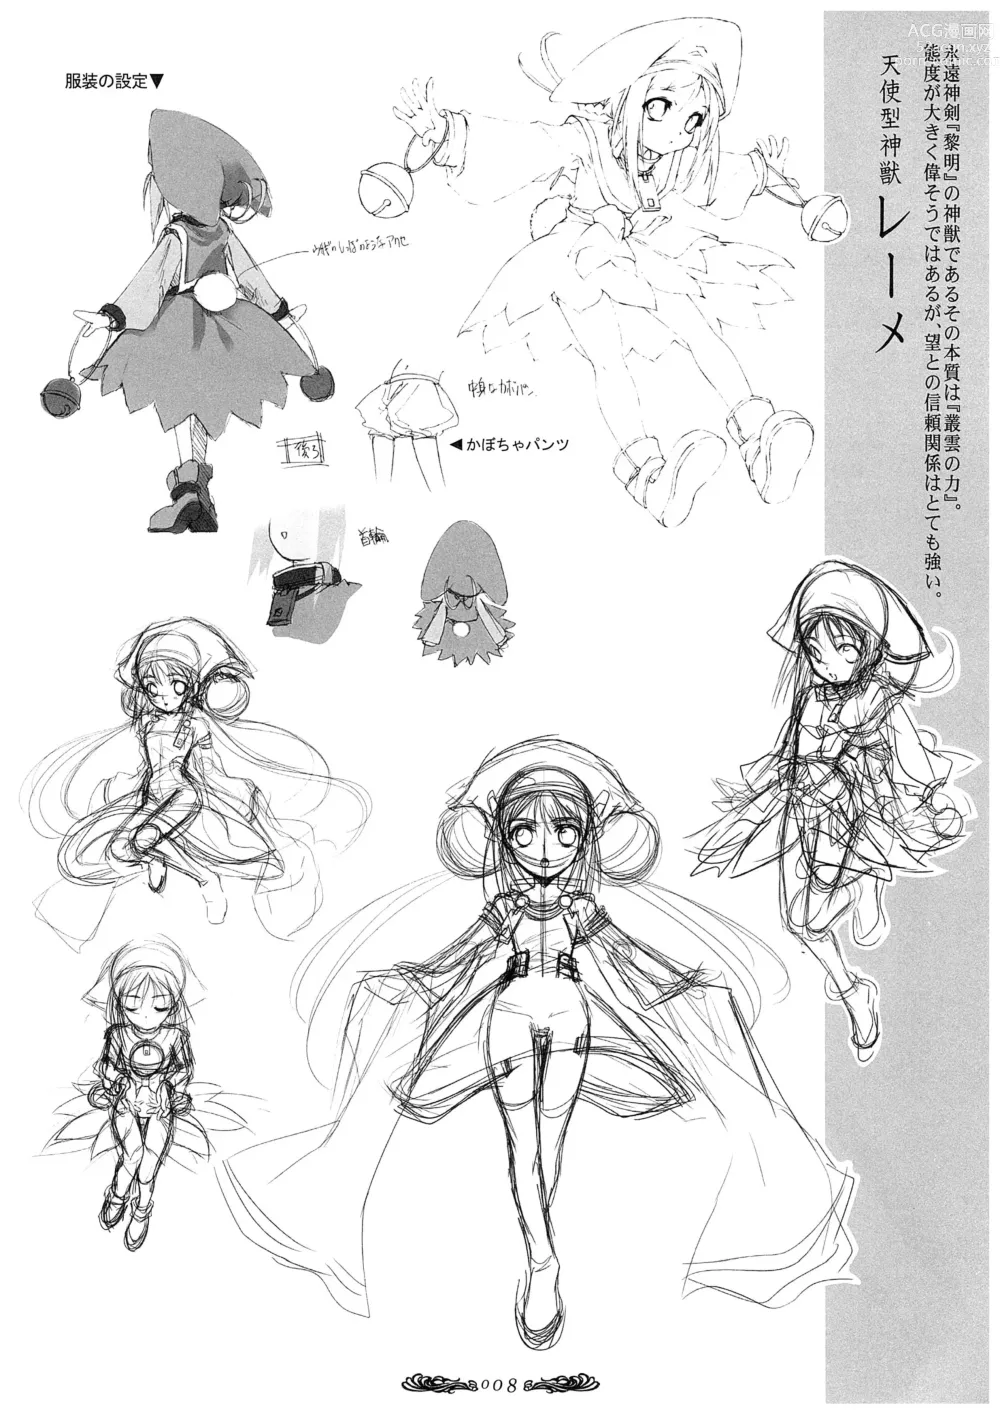 Page 9 of manga Seinarukana - offical ArtBook